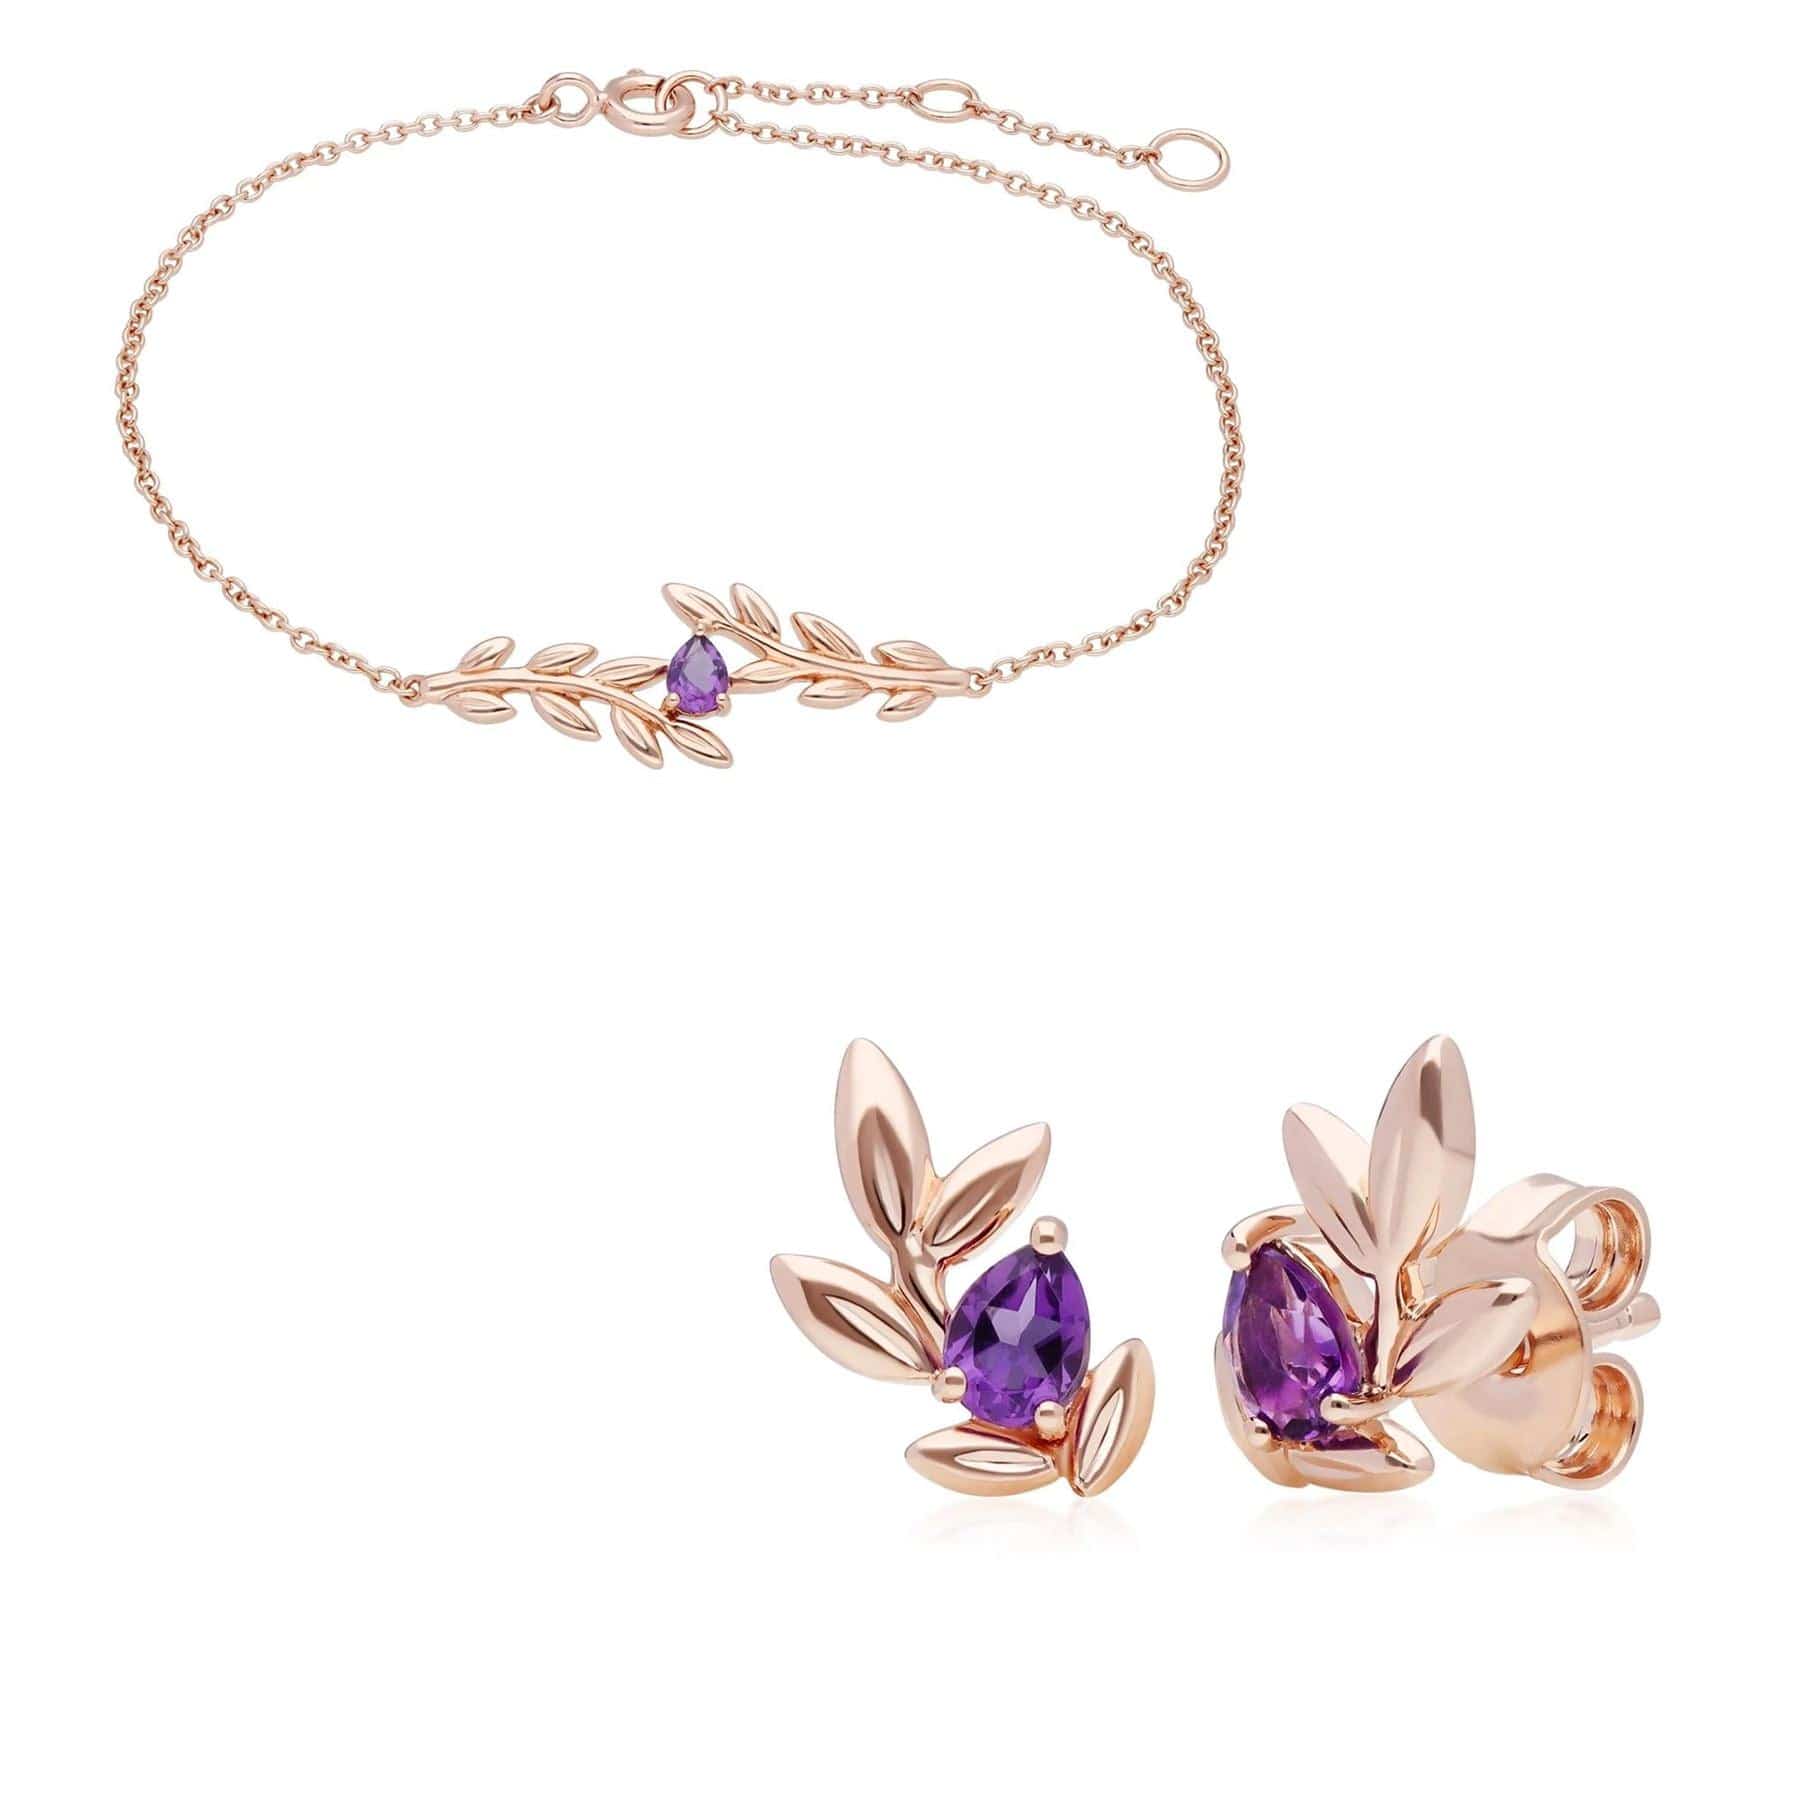 135L0306019-135E1642019 O Leaf Amethyst Bracelet & Earring Set in 9ct Rose Gold 1